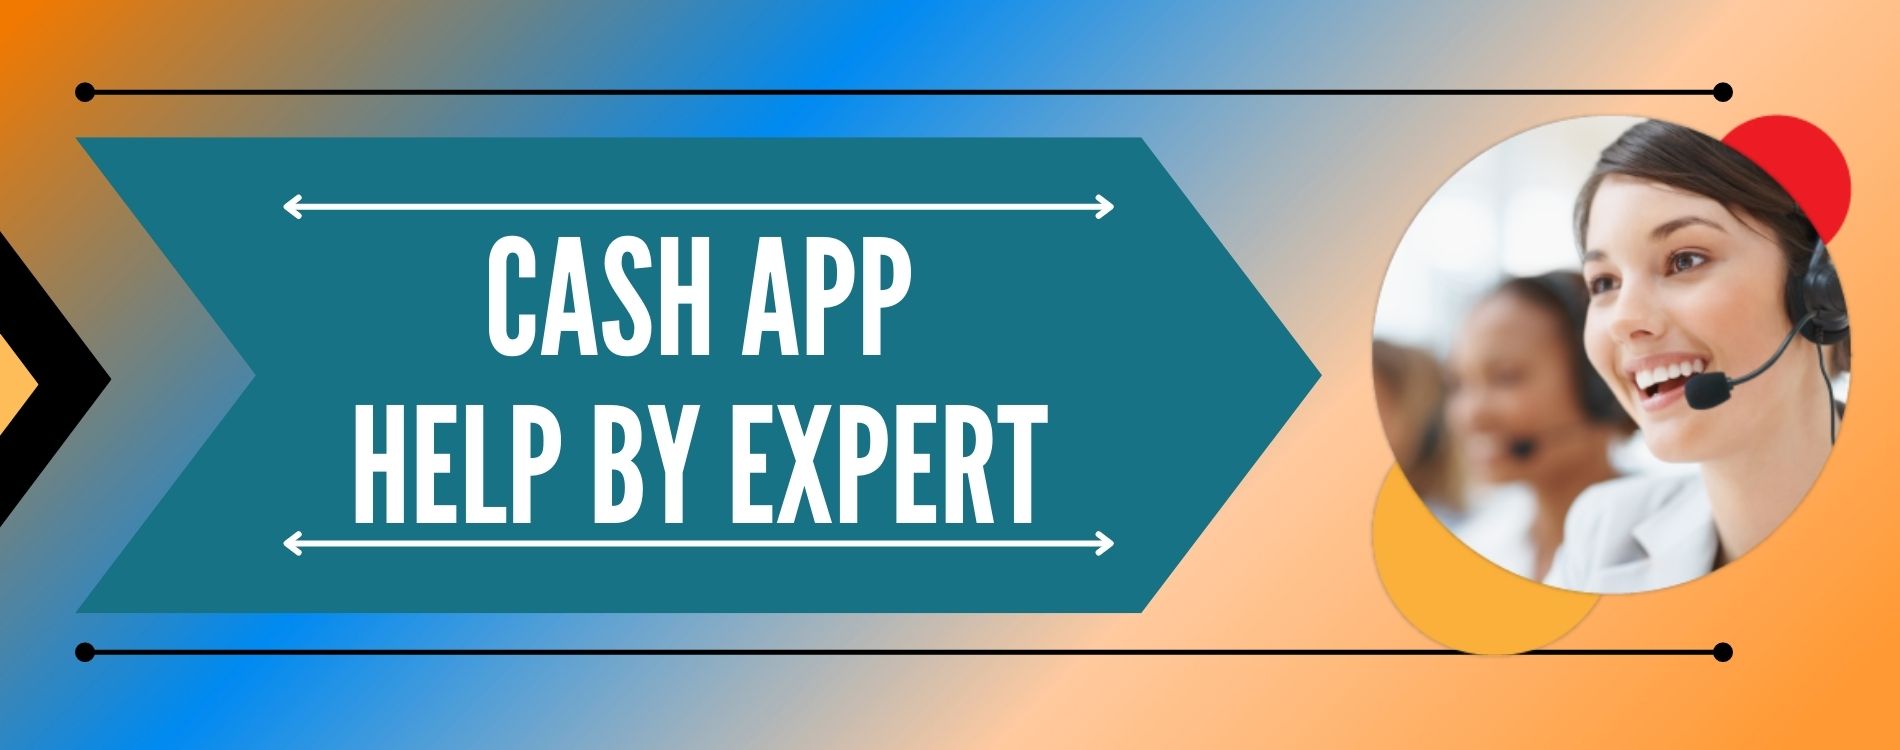 Get Cash App Help | Customer Service | Help By Expert